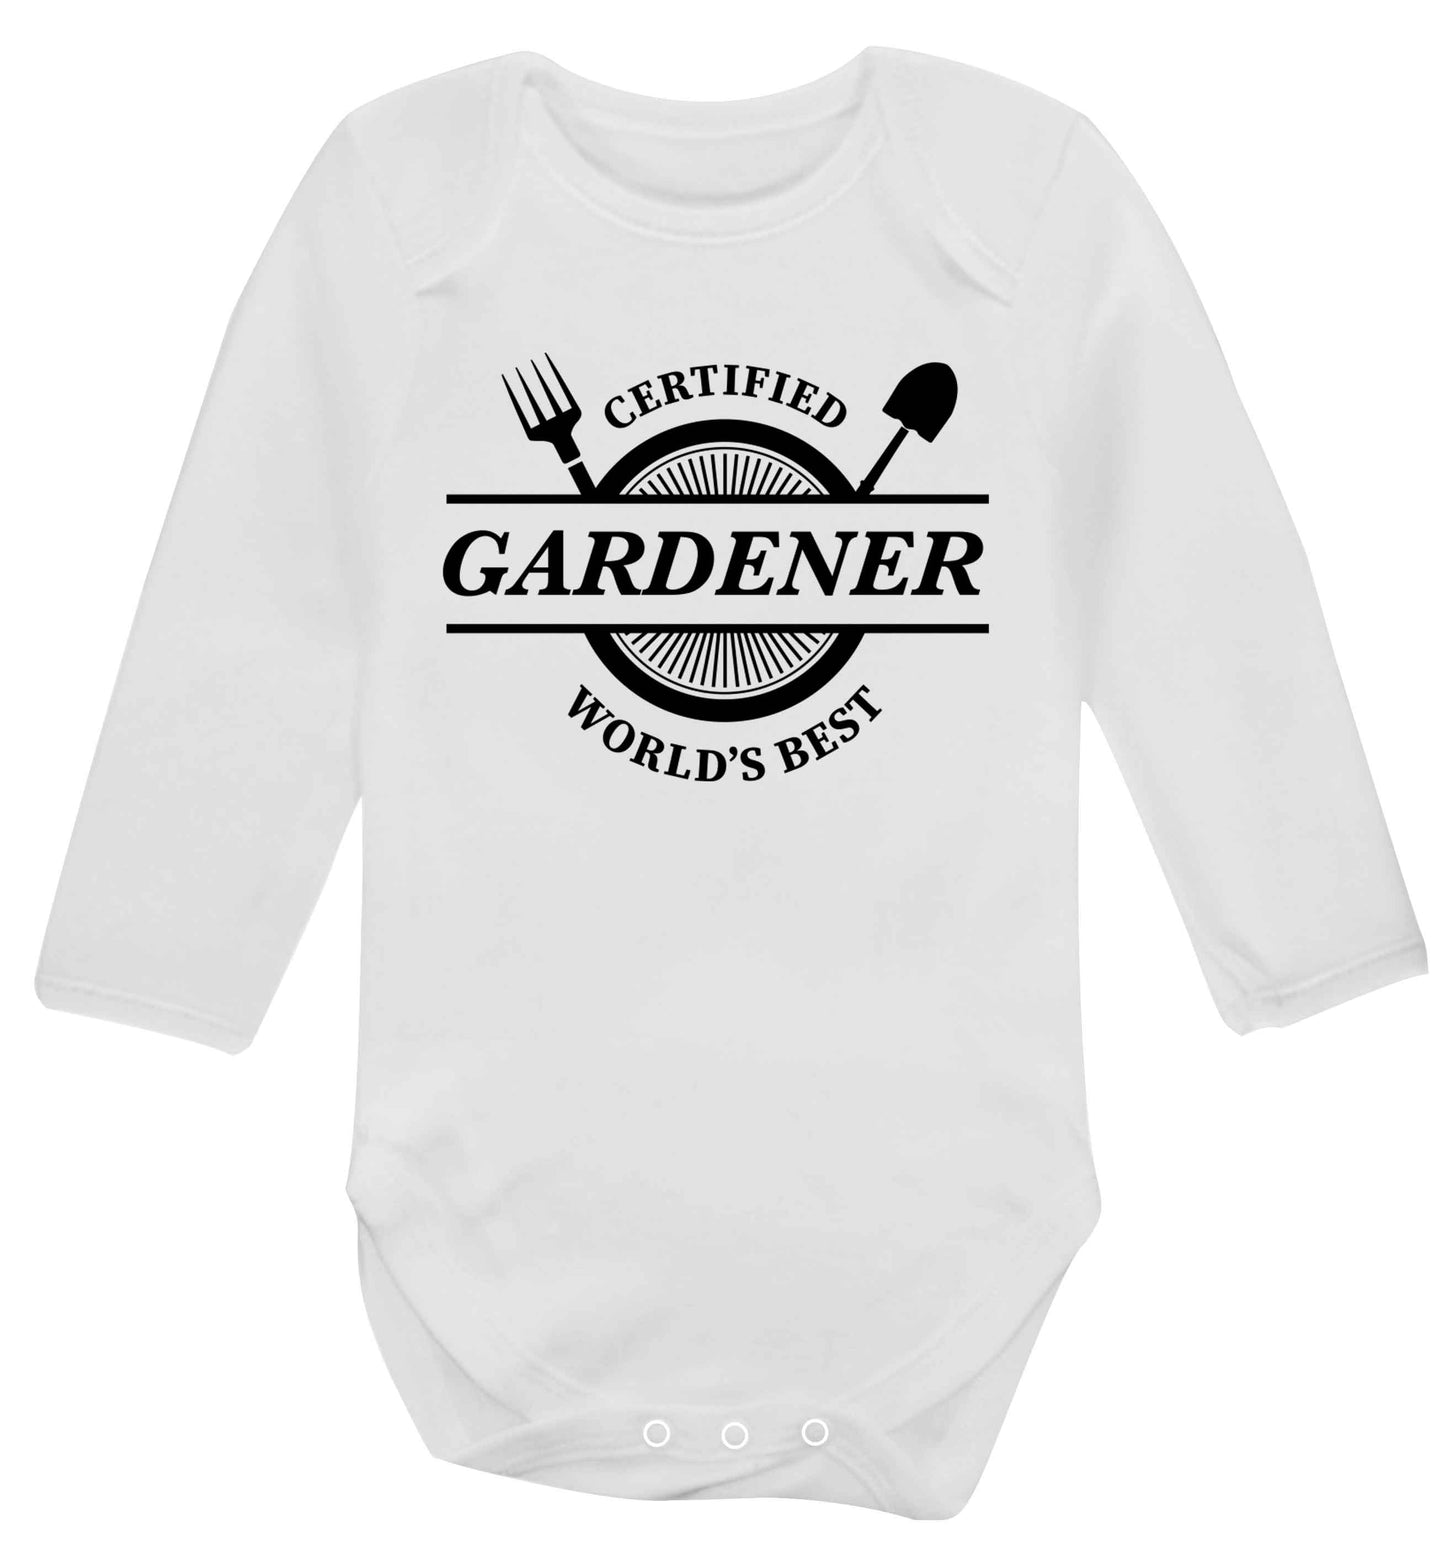 Certified gardener worlds best Baby Vest long sleeved white 6-12 months